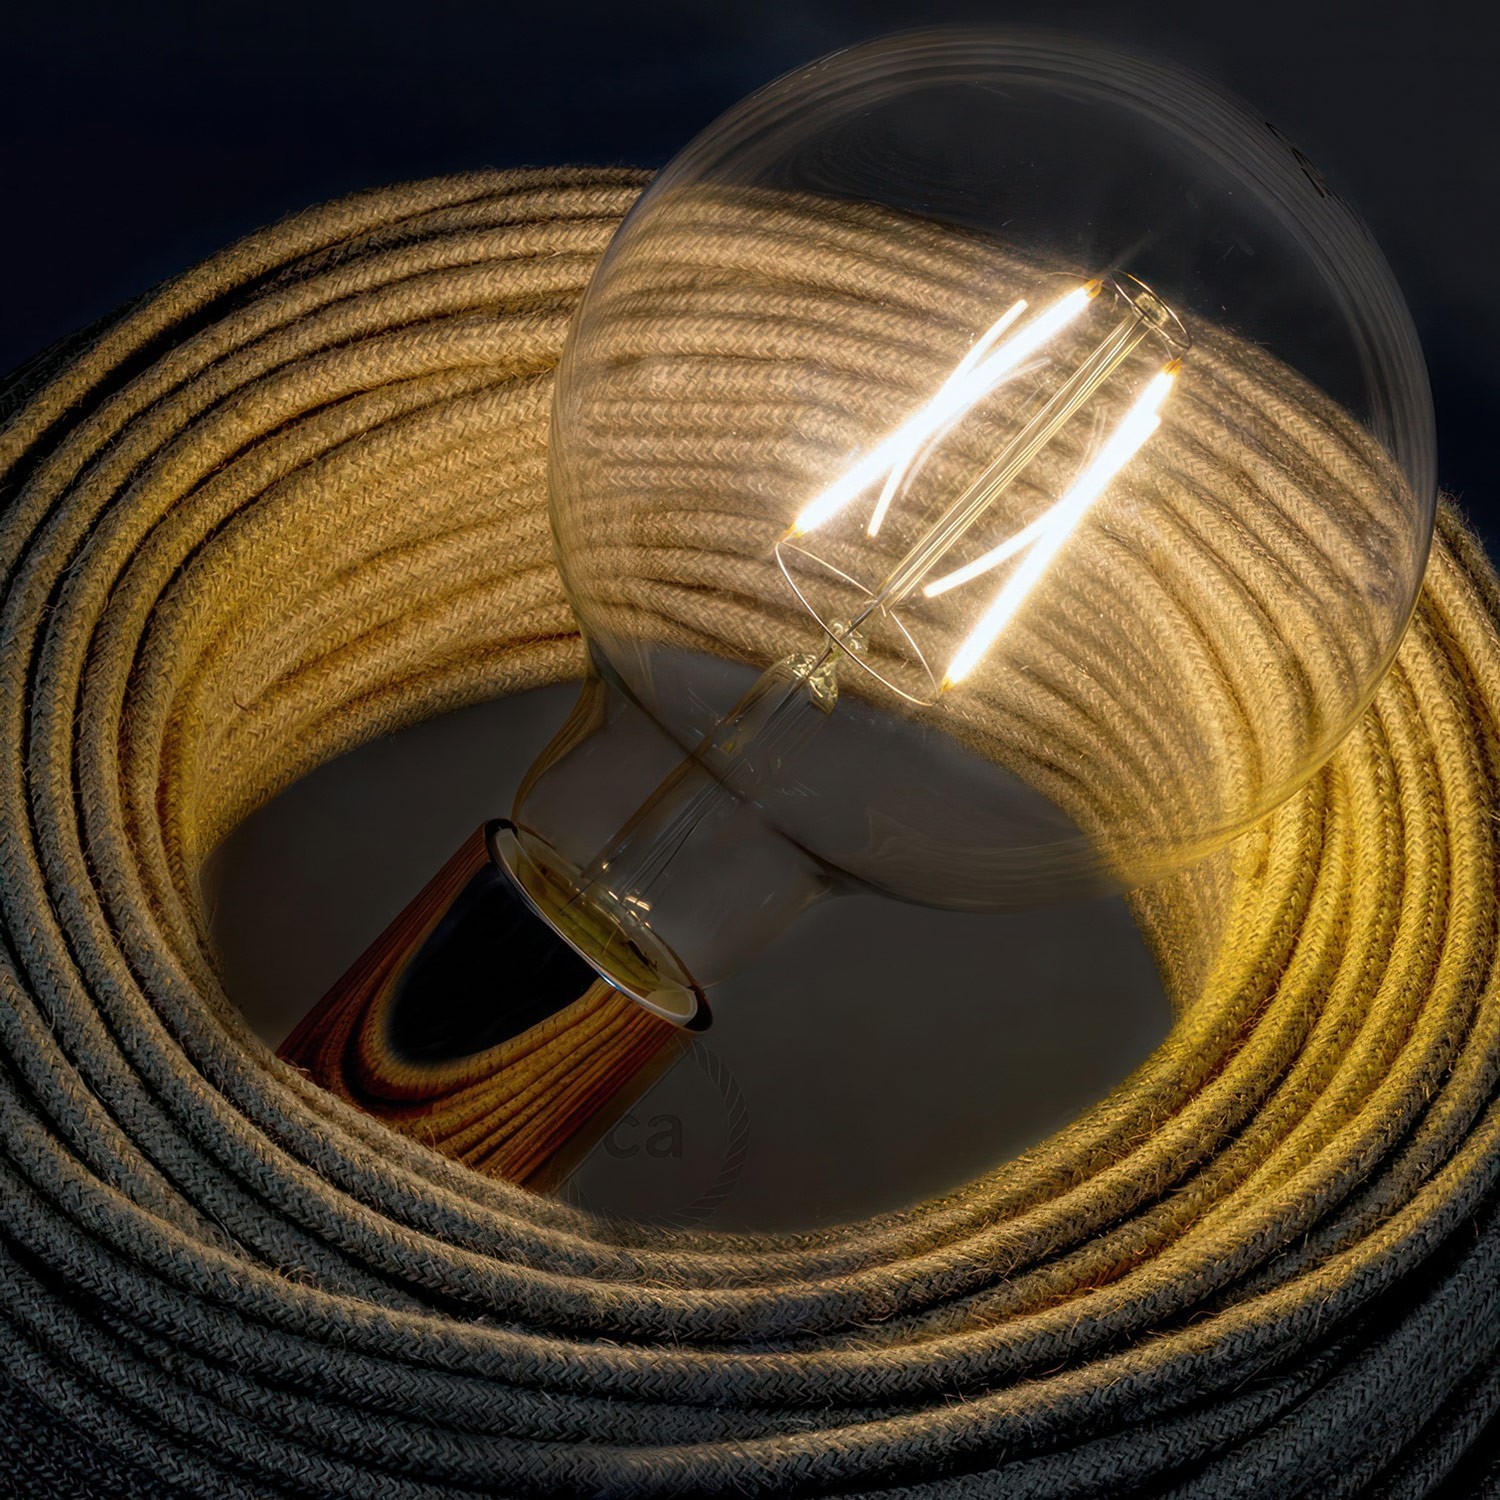 LED Transparent Light Bulb - Globe G125 Long Filament 4,5W 470Lm 2700K